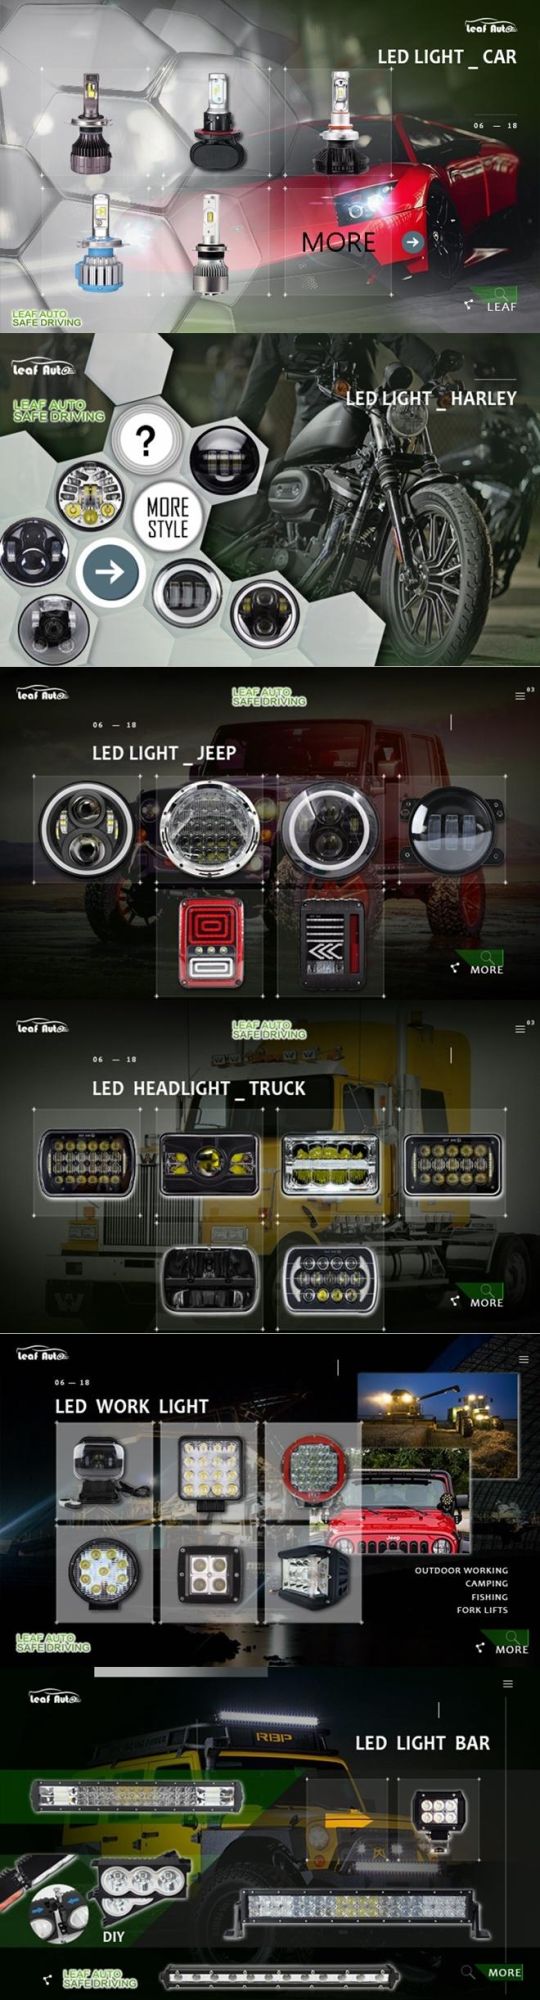 50W 4.3 Inch   LED Work Light, Truck Lights off-Road Vehicle Spotlights